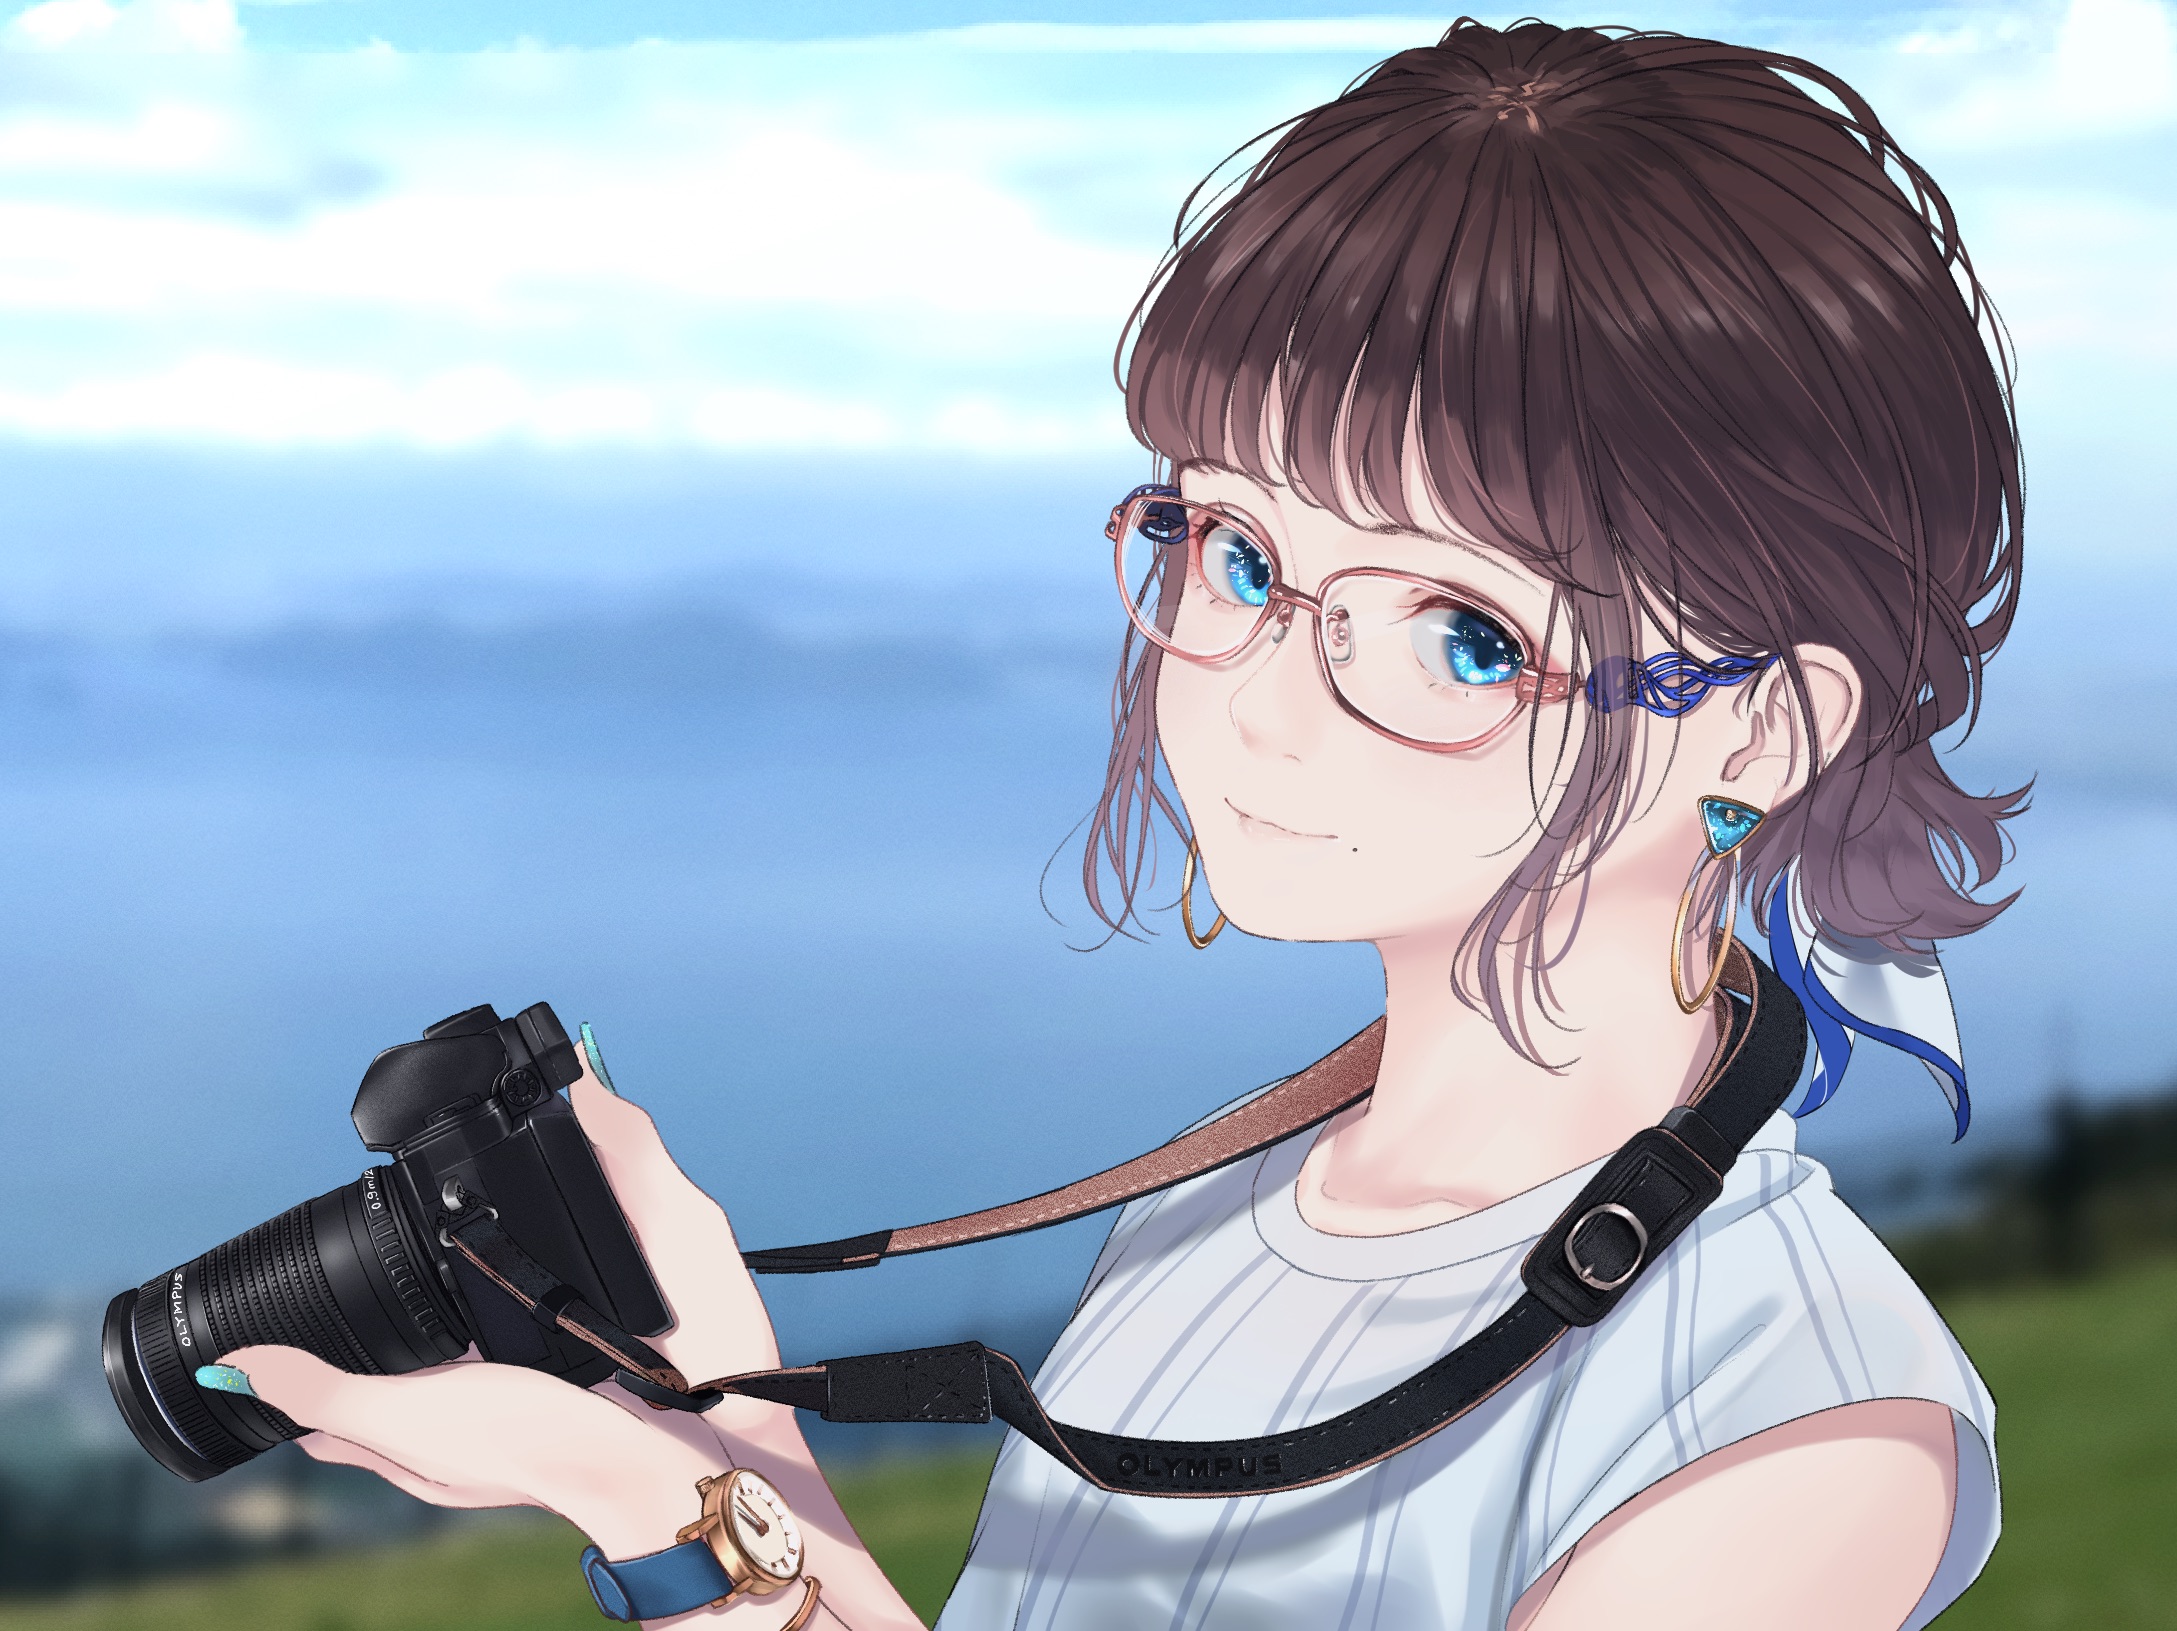 Anime Anime Girls Glasses Blue Eyes Brunette Photographer Wristwatch Clouds Earring Camera Saitou 2177x1631